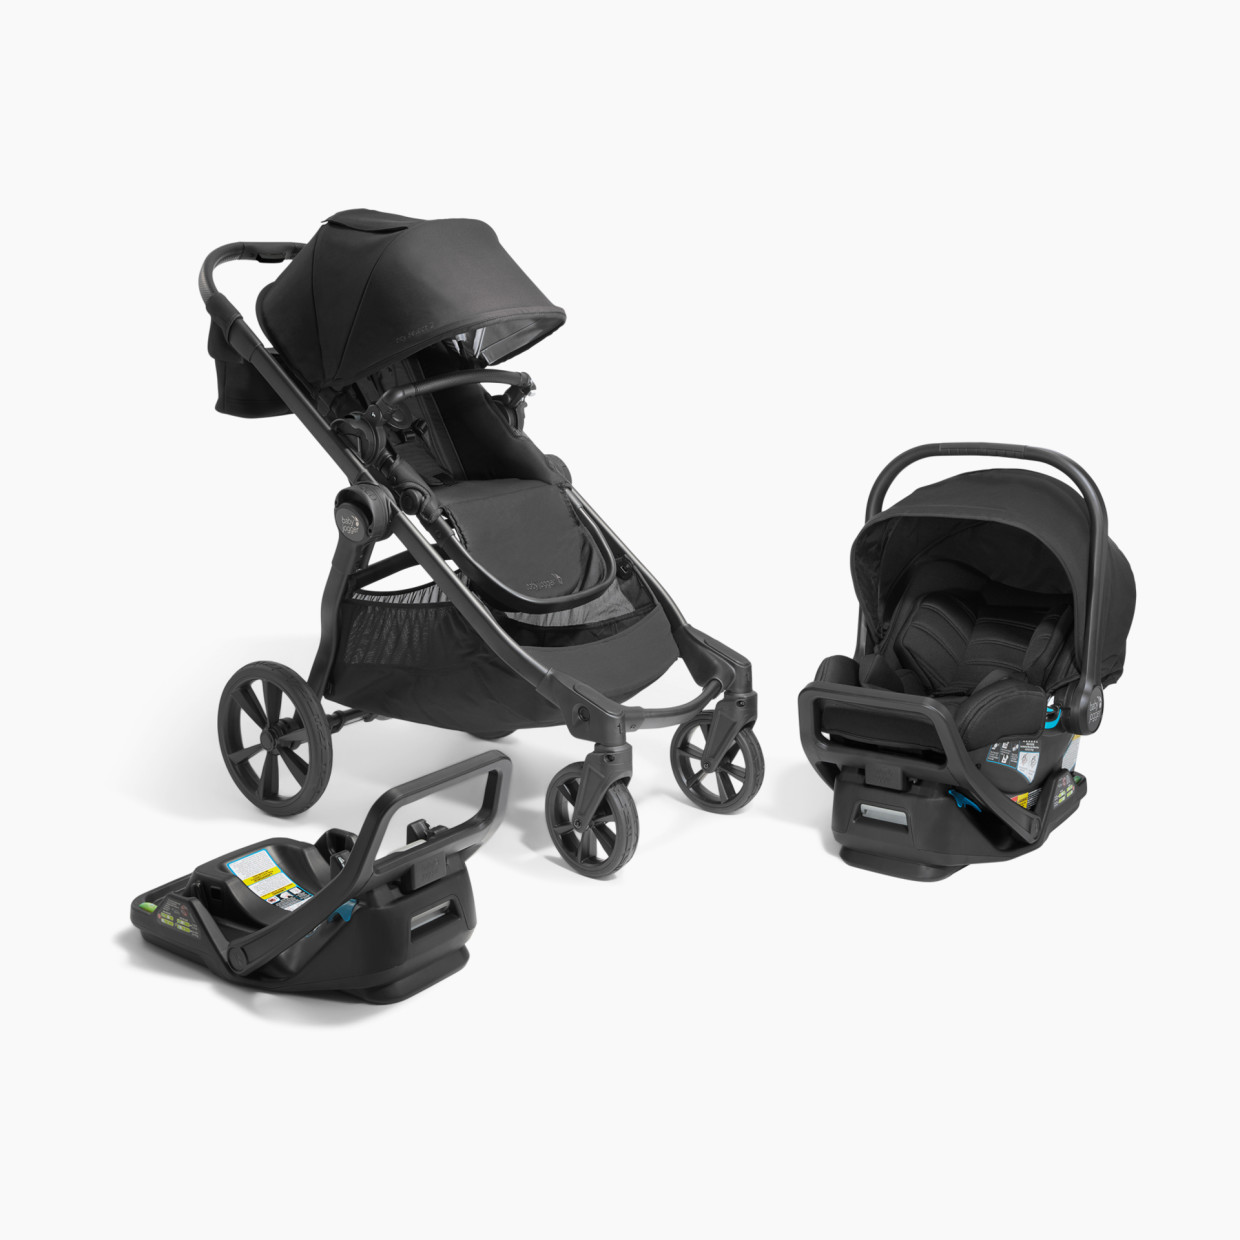 Baby Jogger City Select 2 Travel System, Eco Collection, Infant Essentials Bundle - Lunar Black.